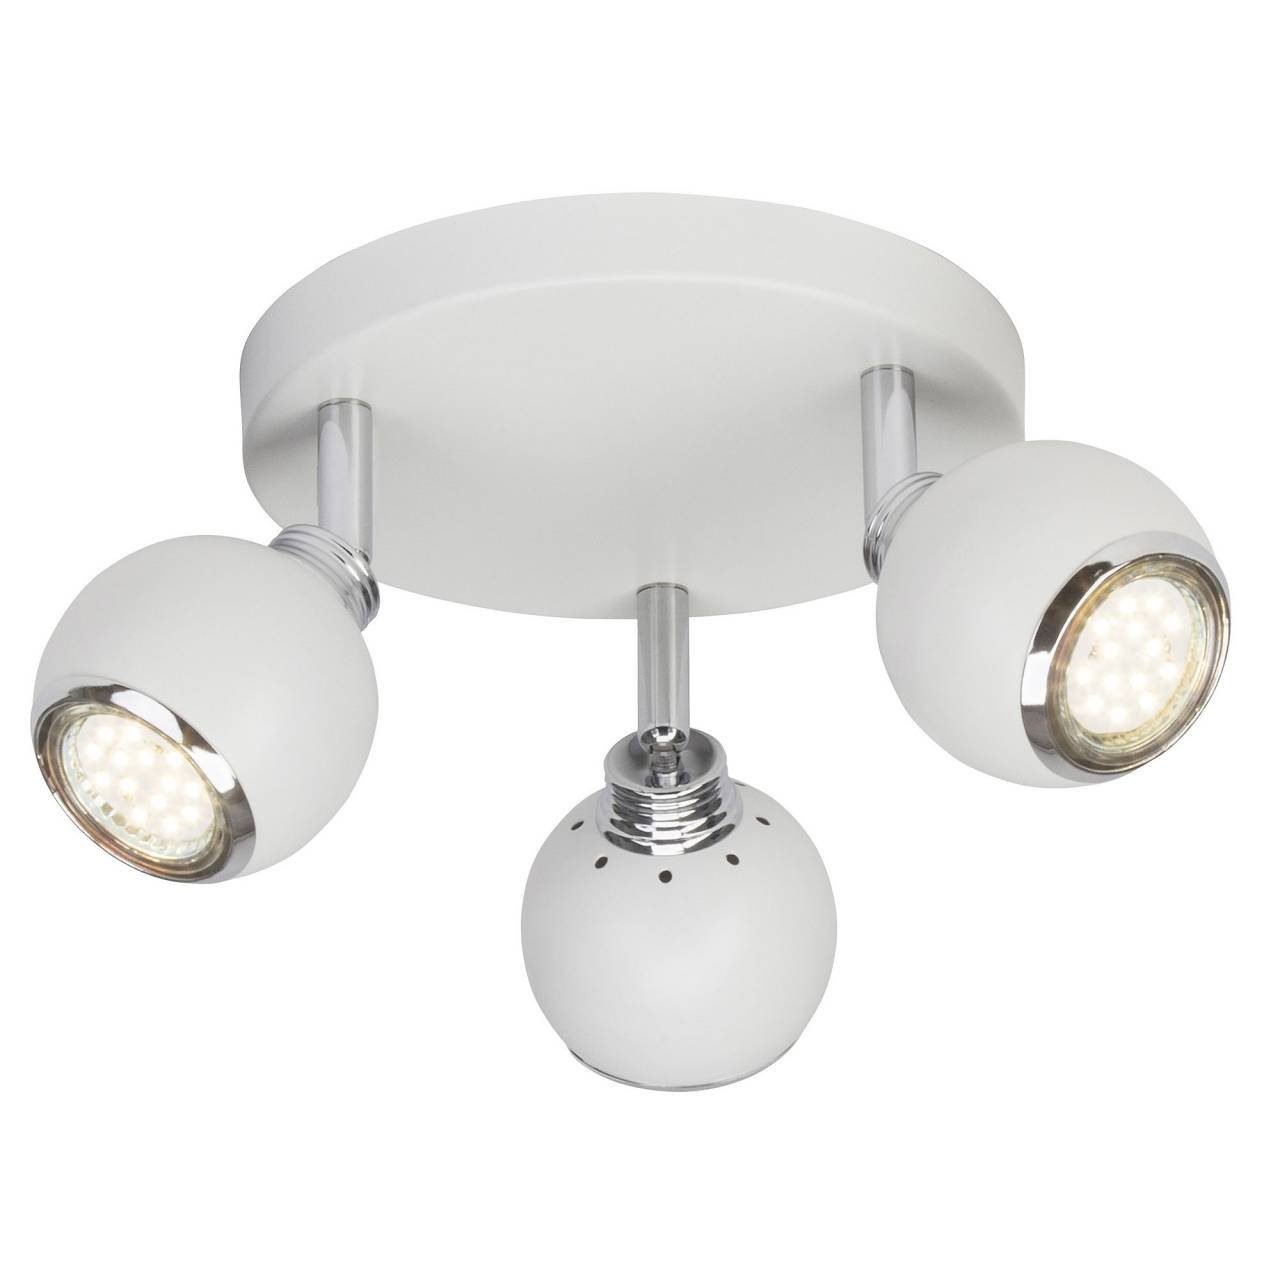 Lampe LED-PAR51, GU10, LED 3flg Brilliant Spotrondell LED 3x 3000K, 3W Deckenleuchte Ina Ina, weiß/chrom